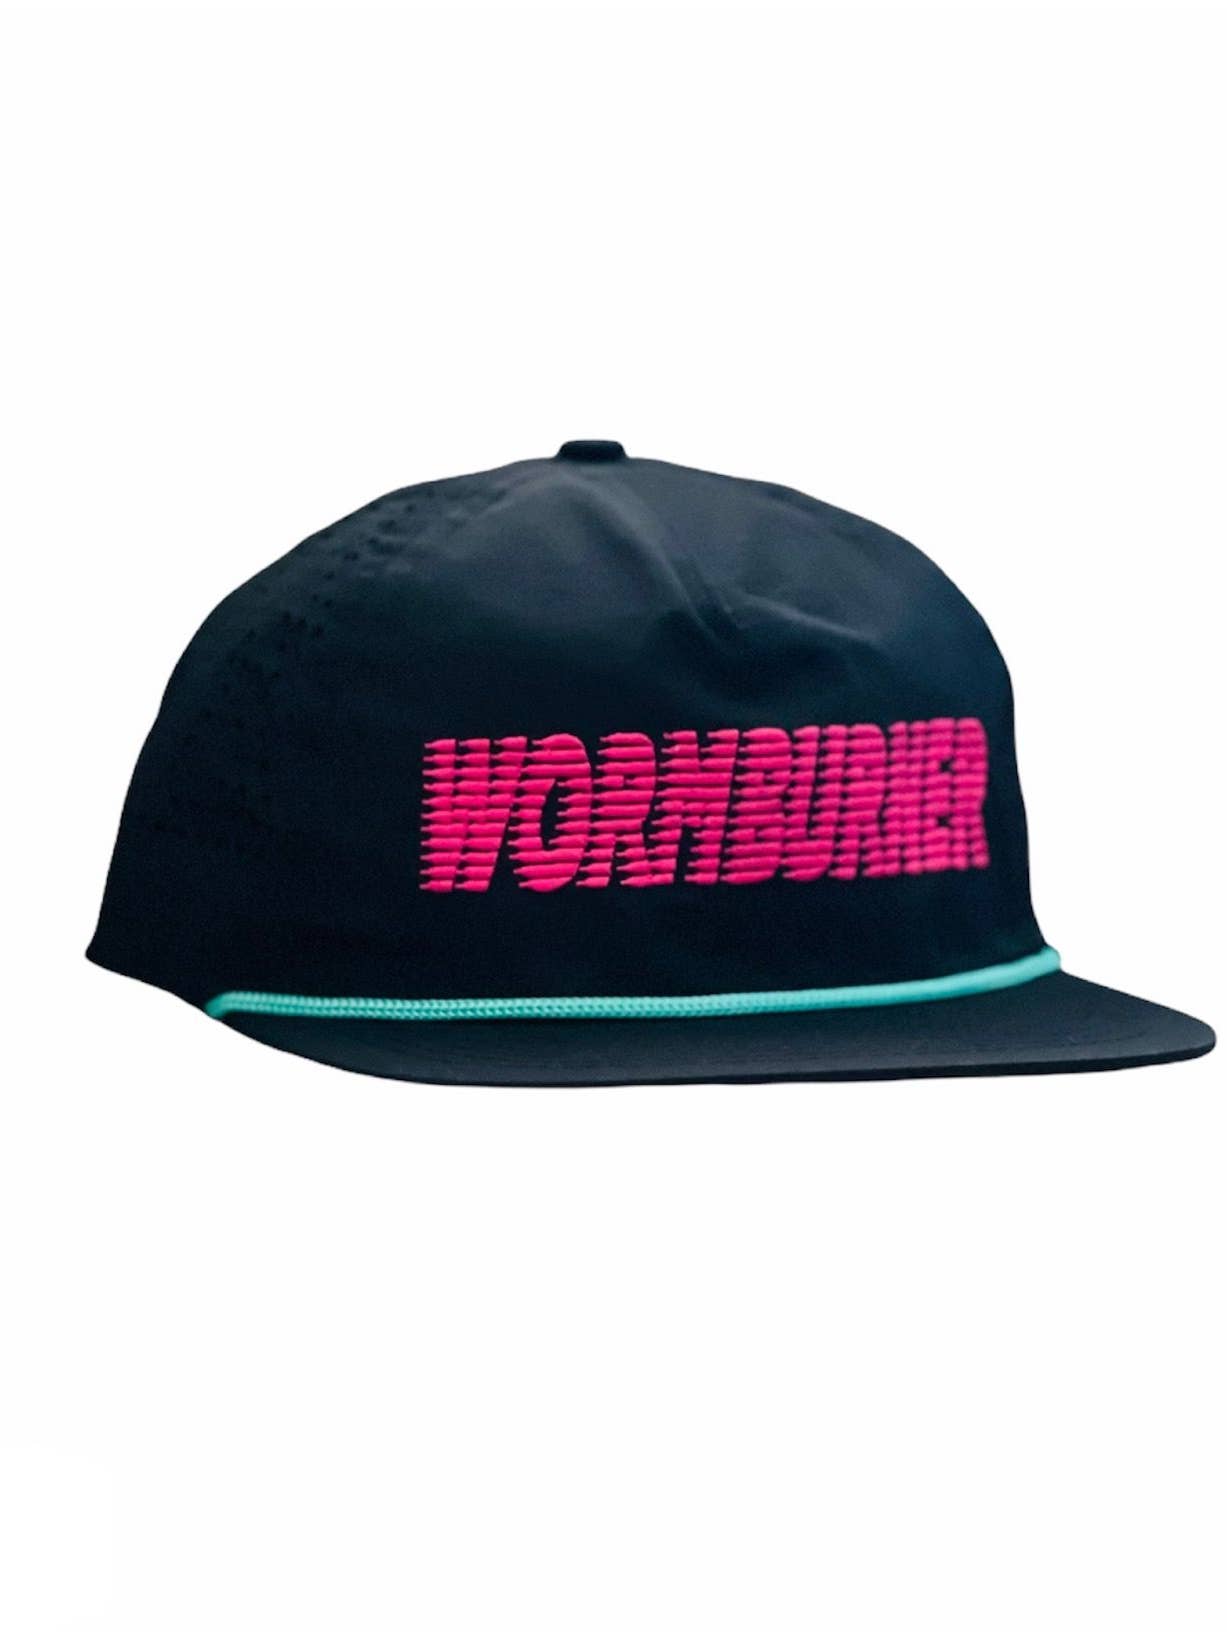 Wormburner Hat